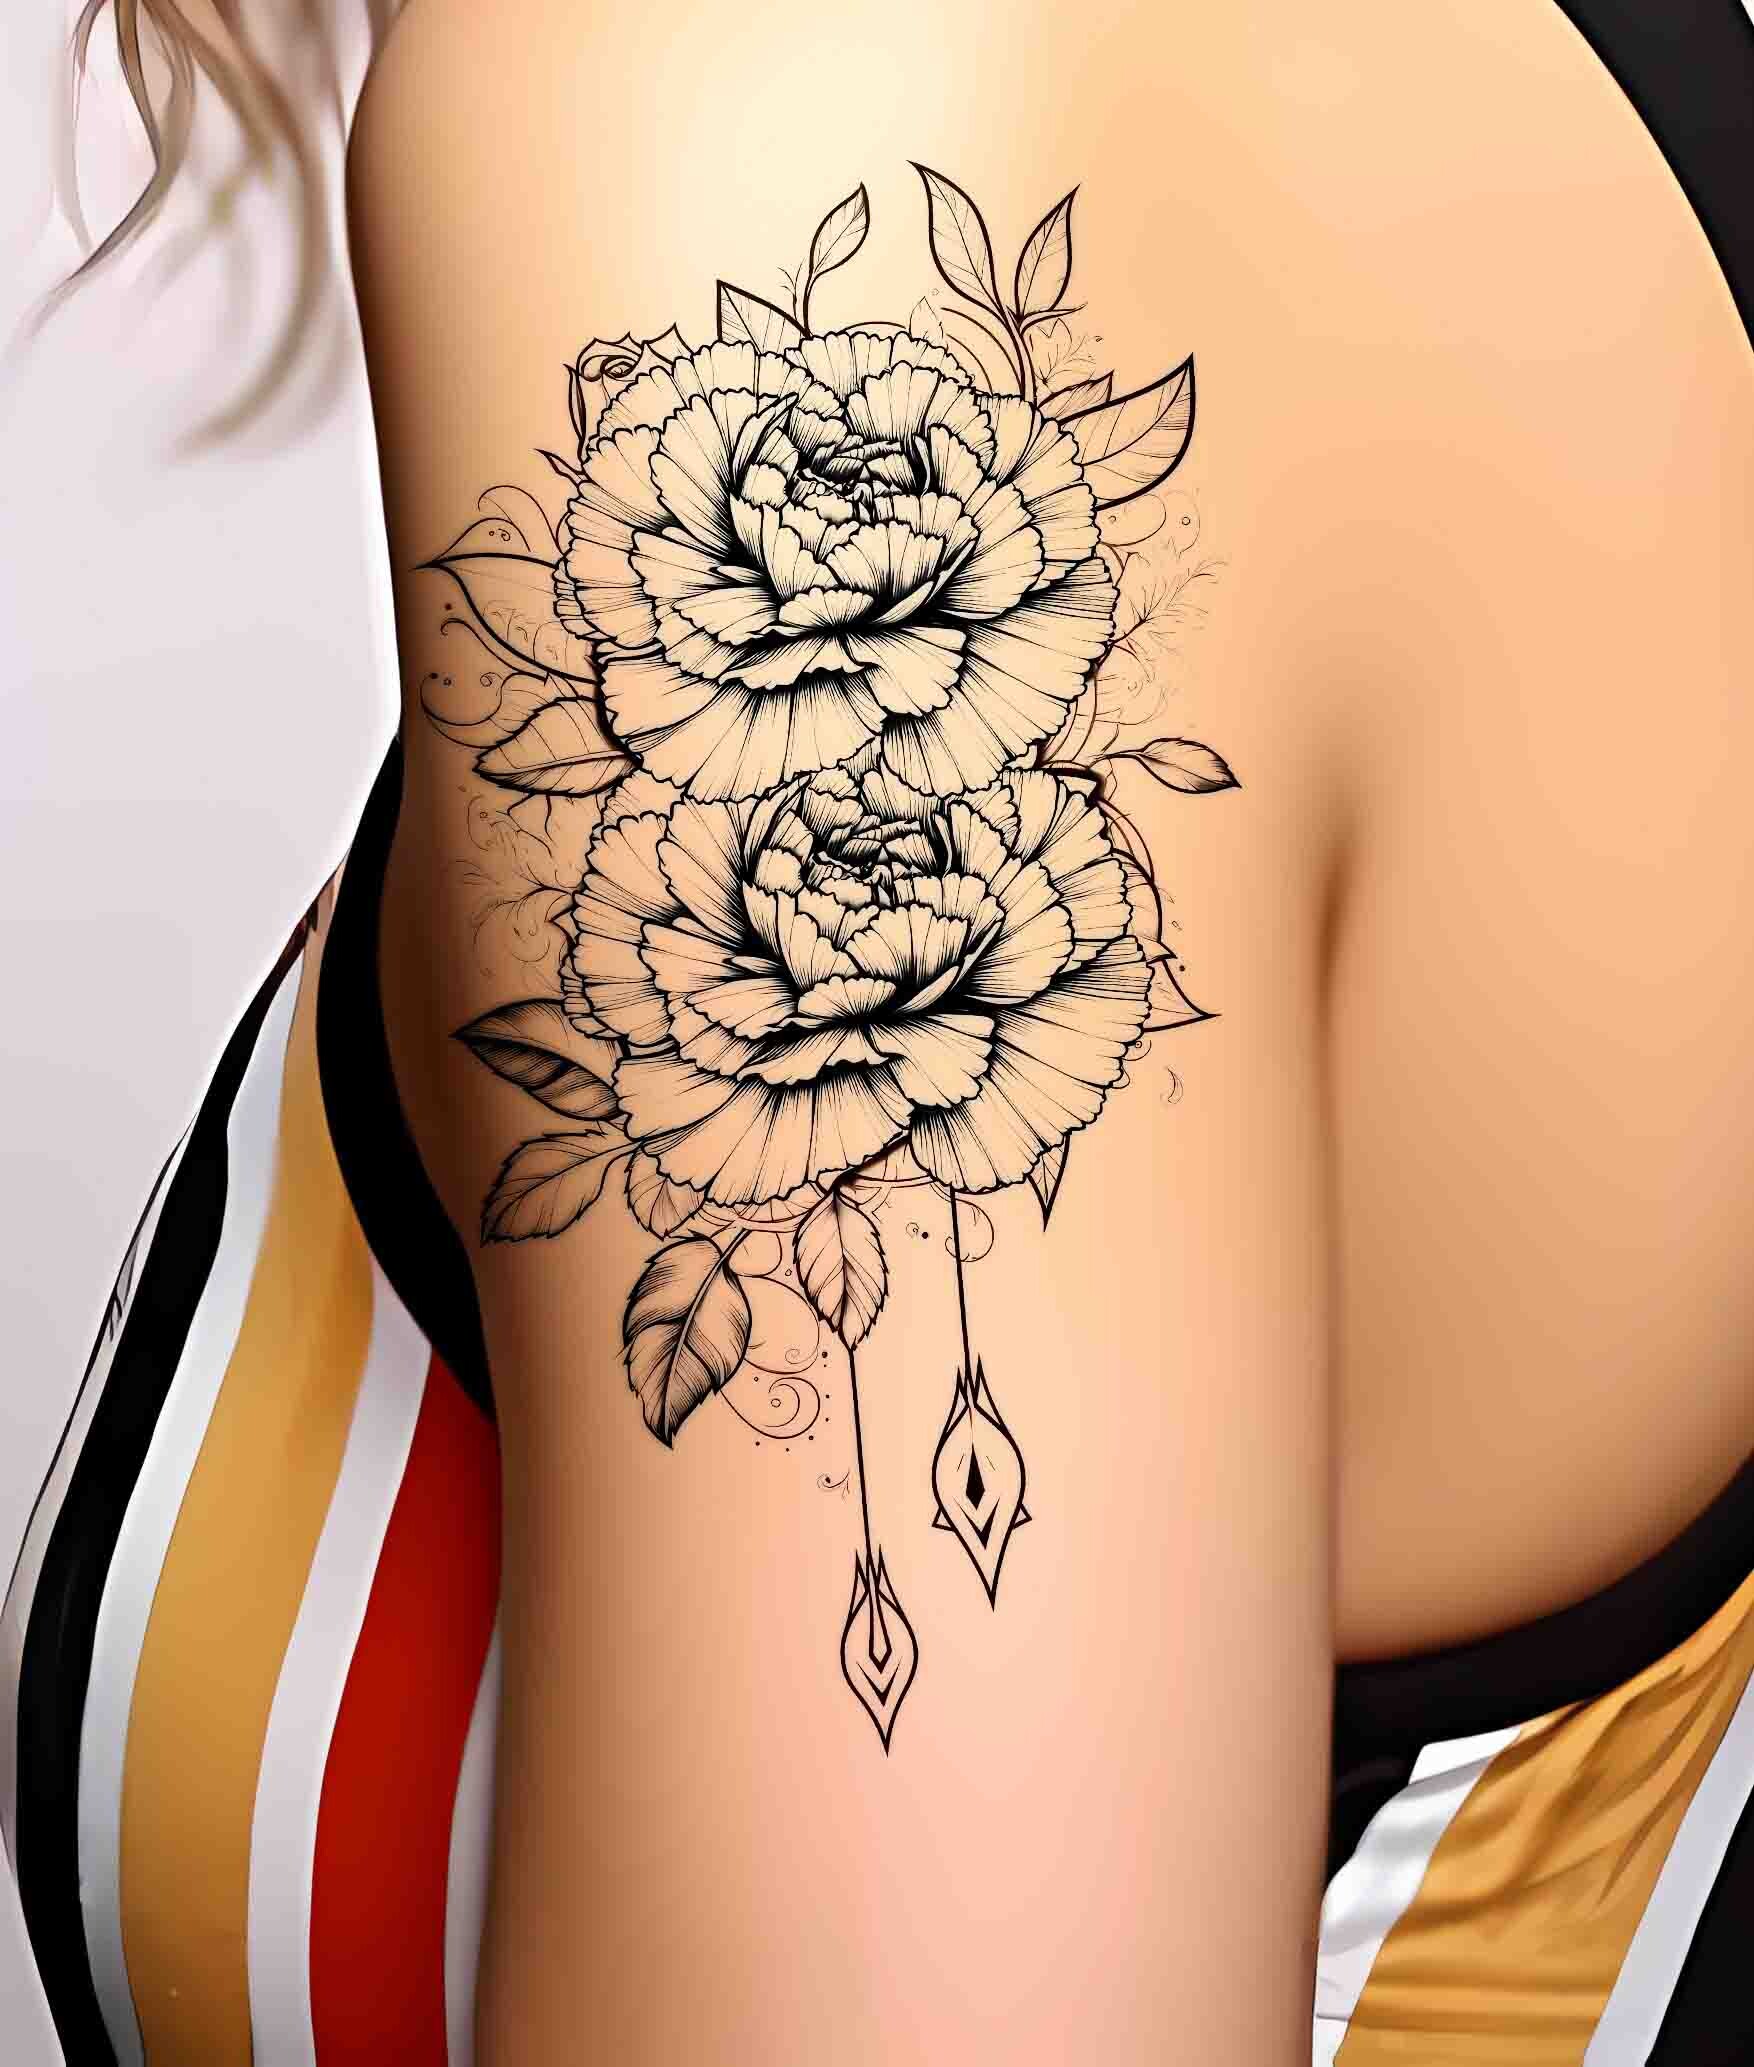 Tattoo Examples | Work by Dan Wes Wesley